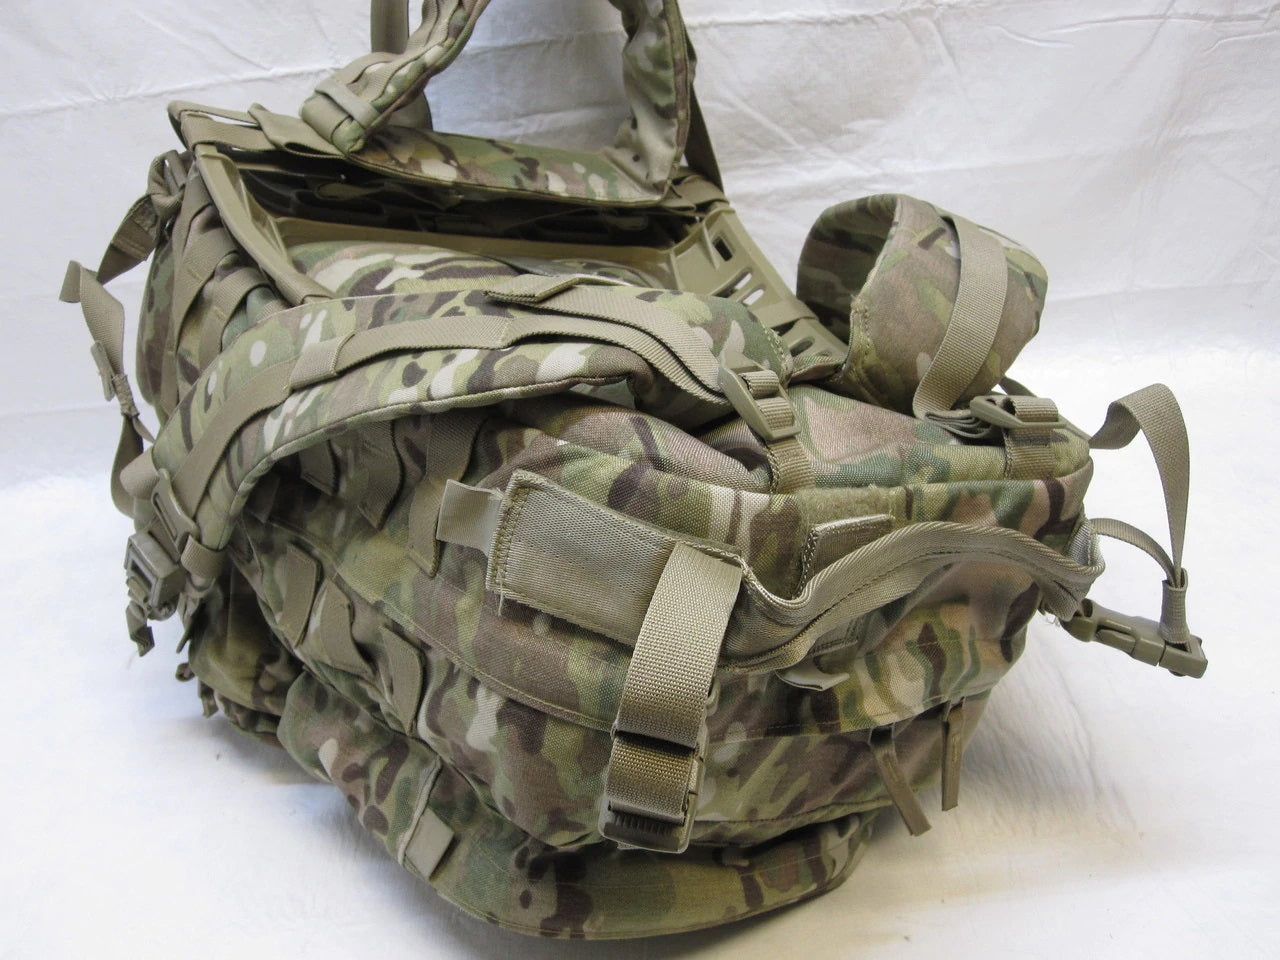 Adjustable Backpack Shield Straps - Altruistic - #AllTru2U